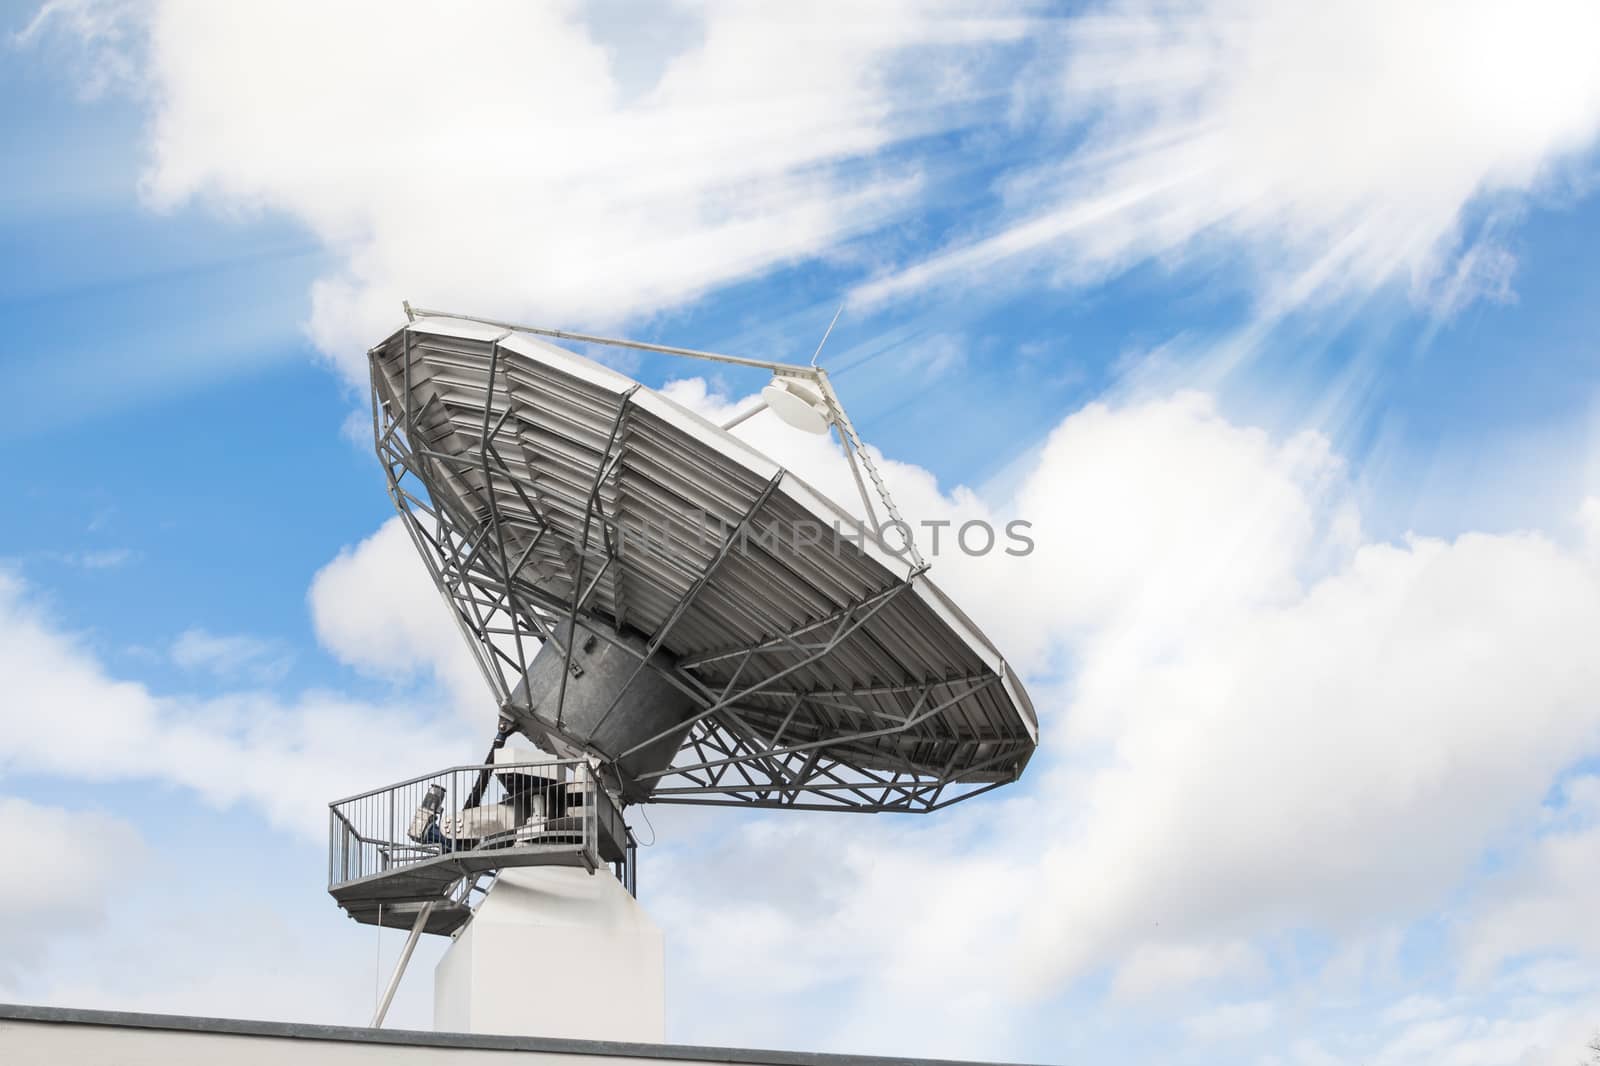 Telecommunications radar parabolic radio antenna by servickuz